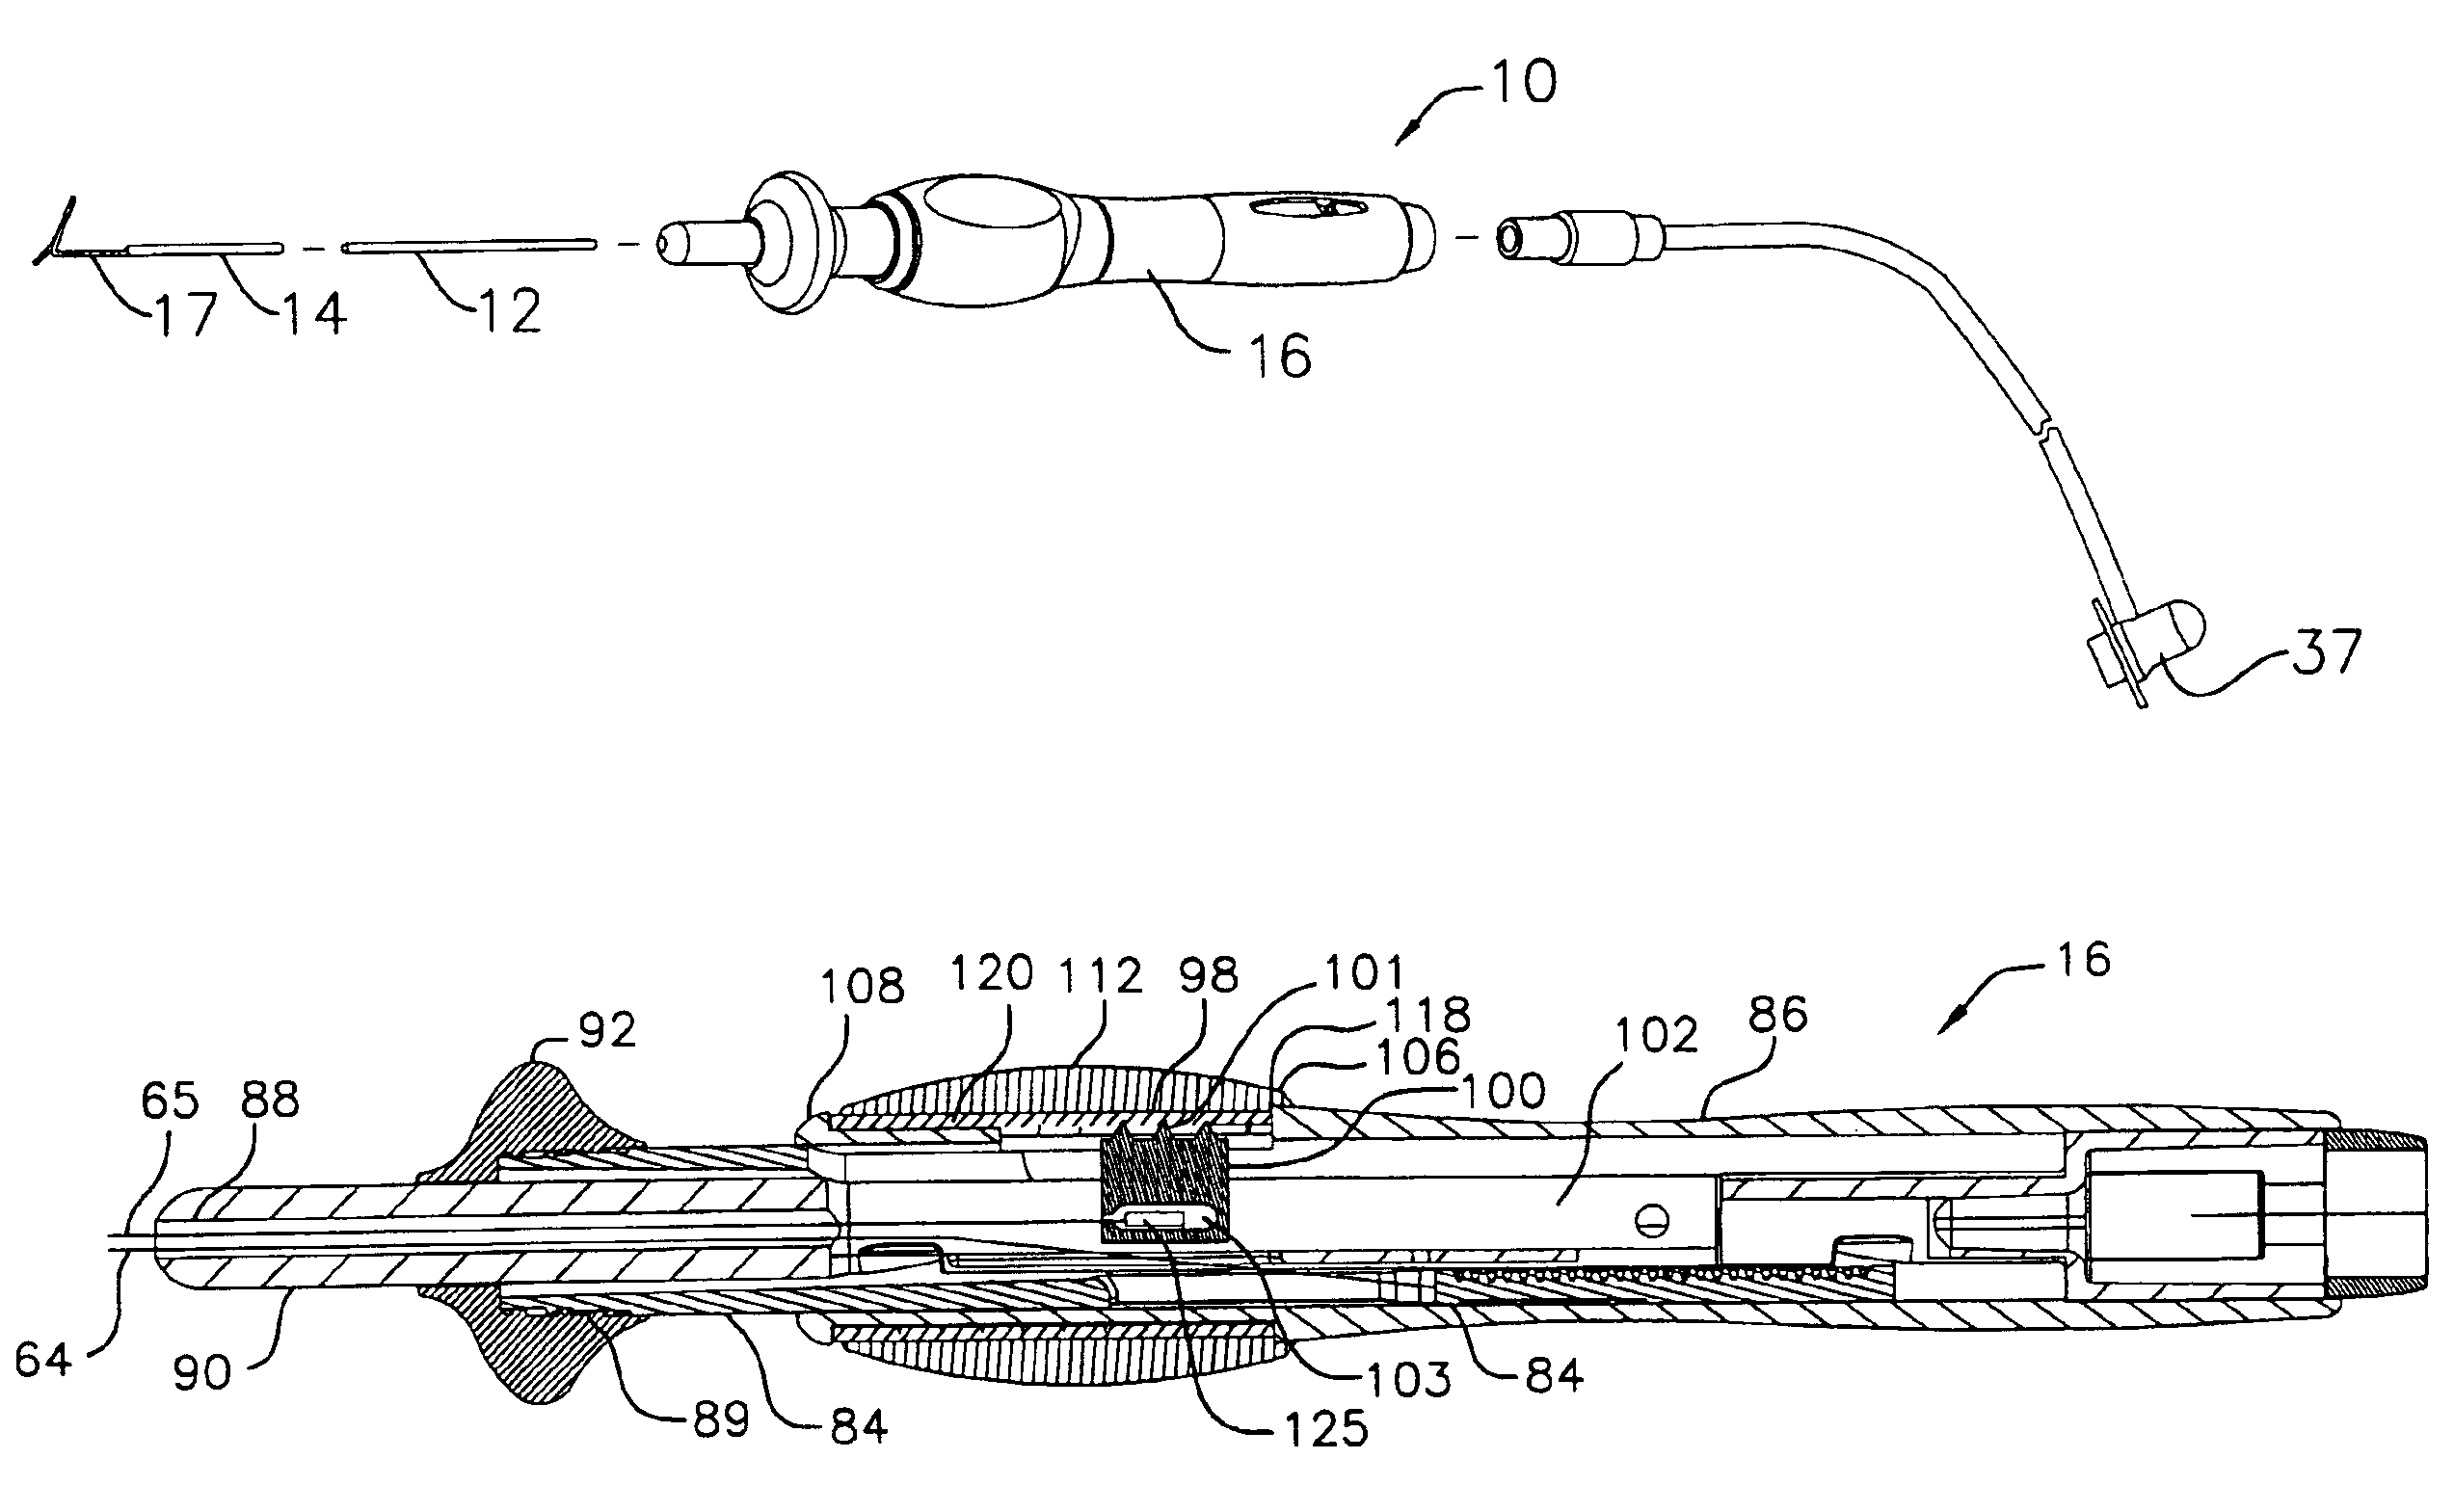 Dual-function catheter handle